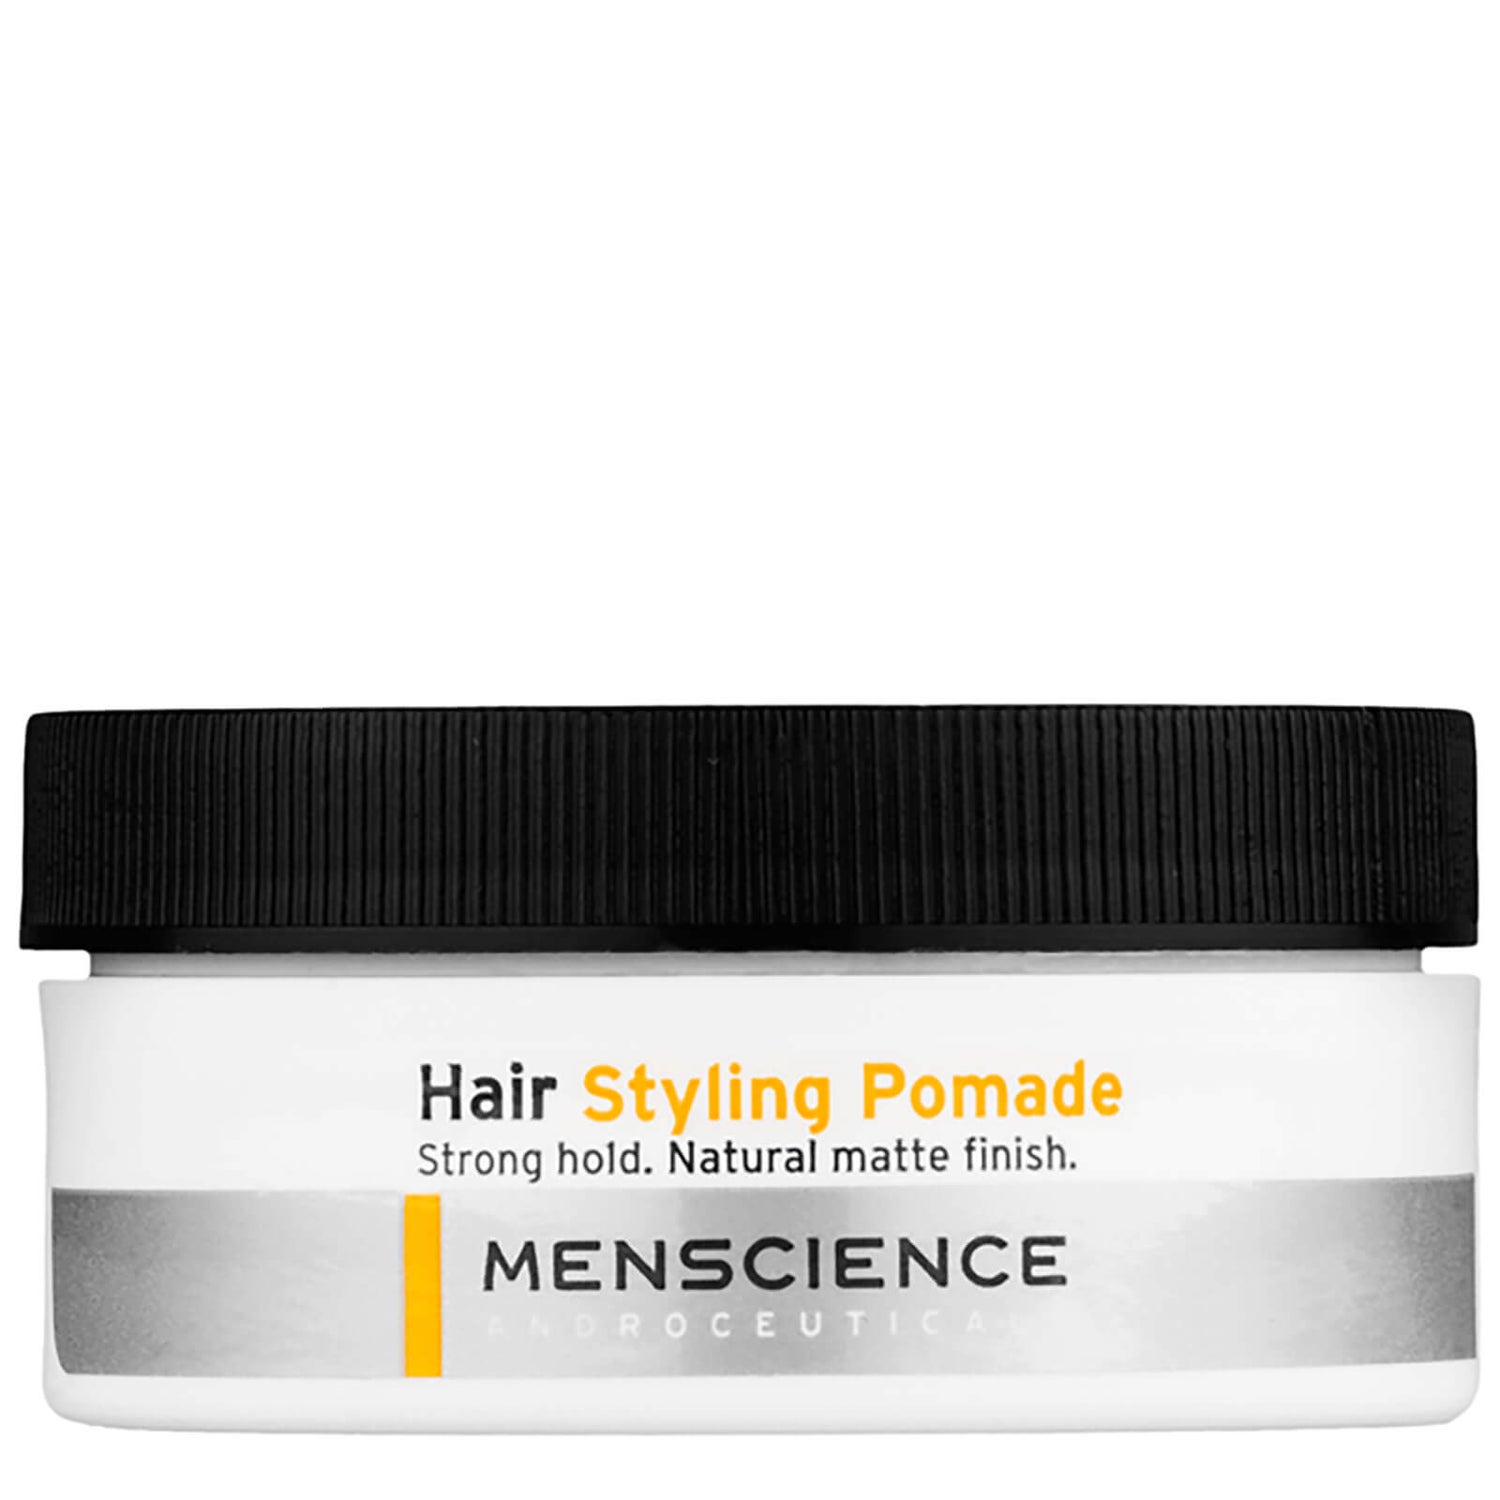 Hair Styling Pomade de Menscience (56g)